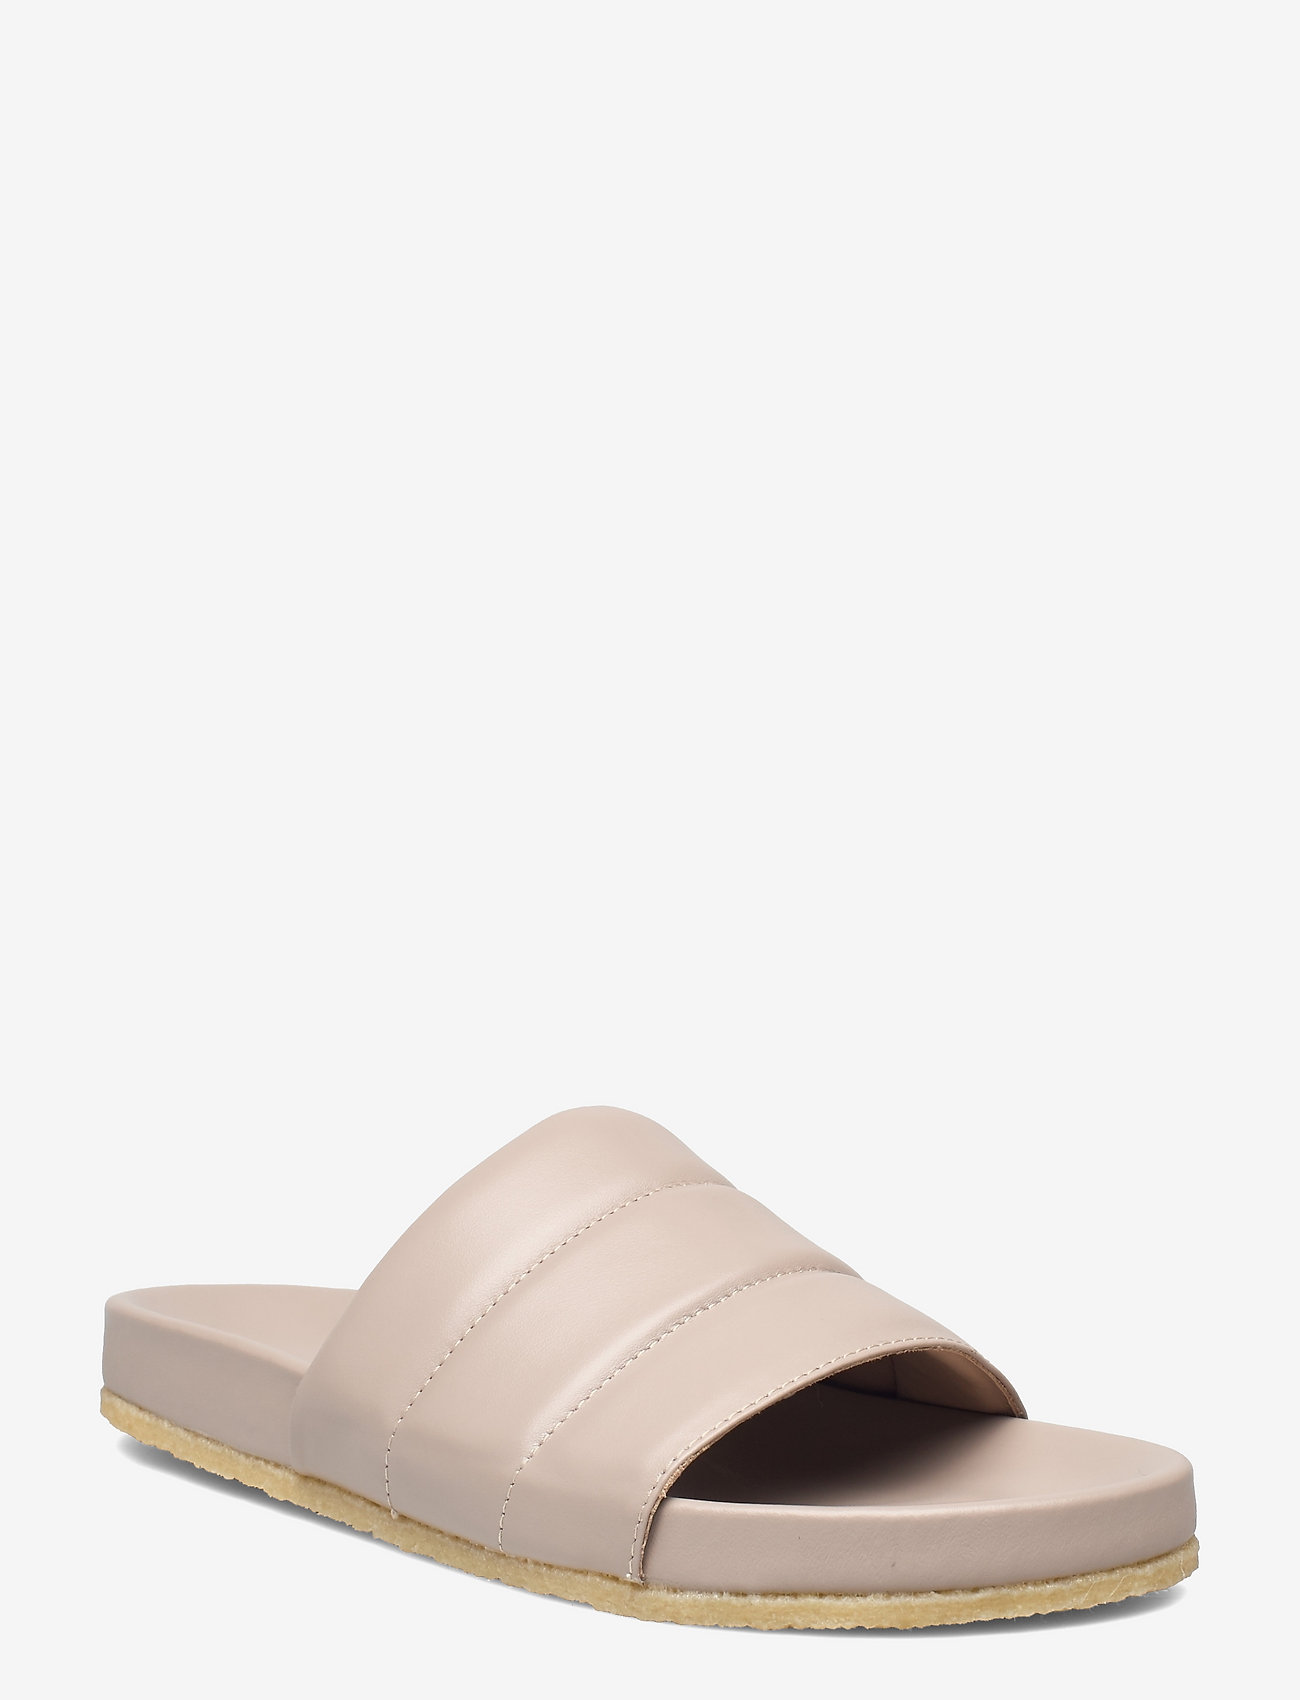 ANGULUS - Sandals - flat - open toe - op - flade sandaler - 1501 light beige - 0